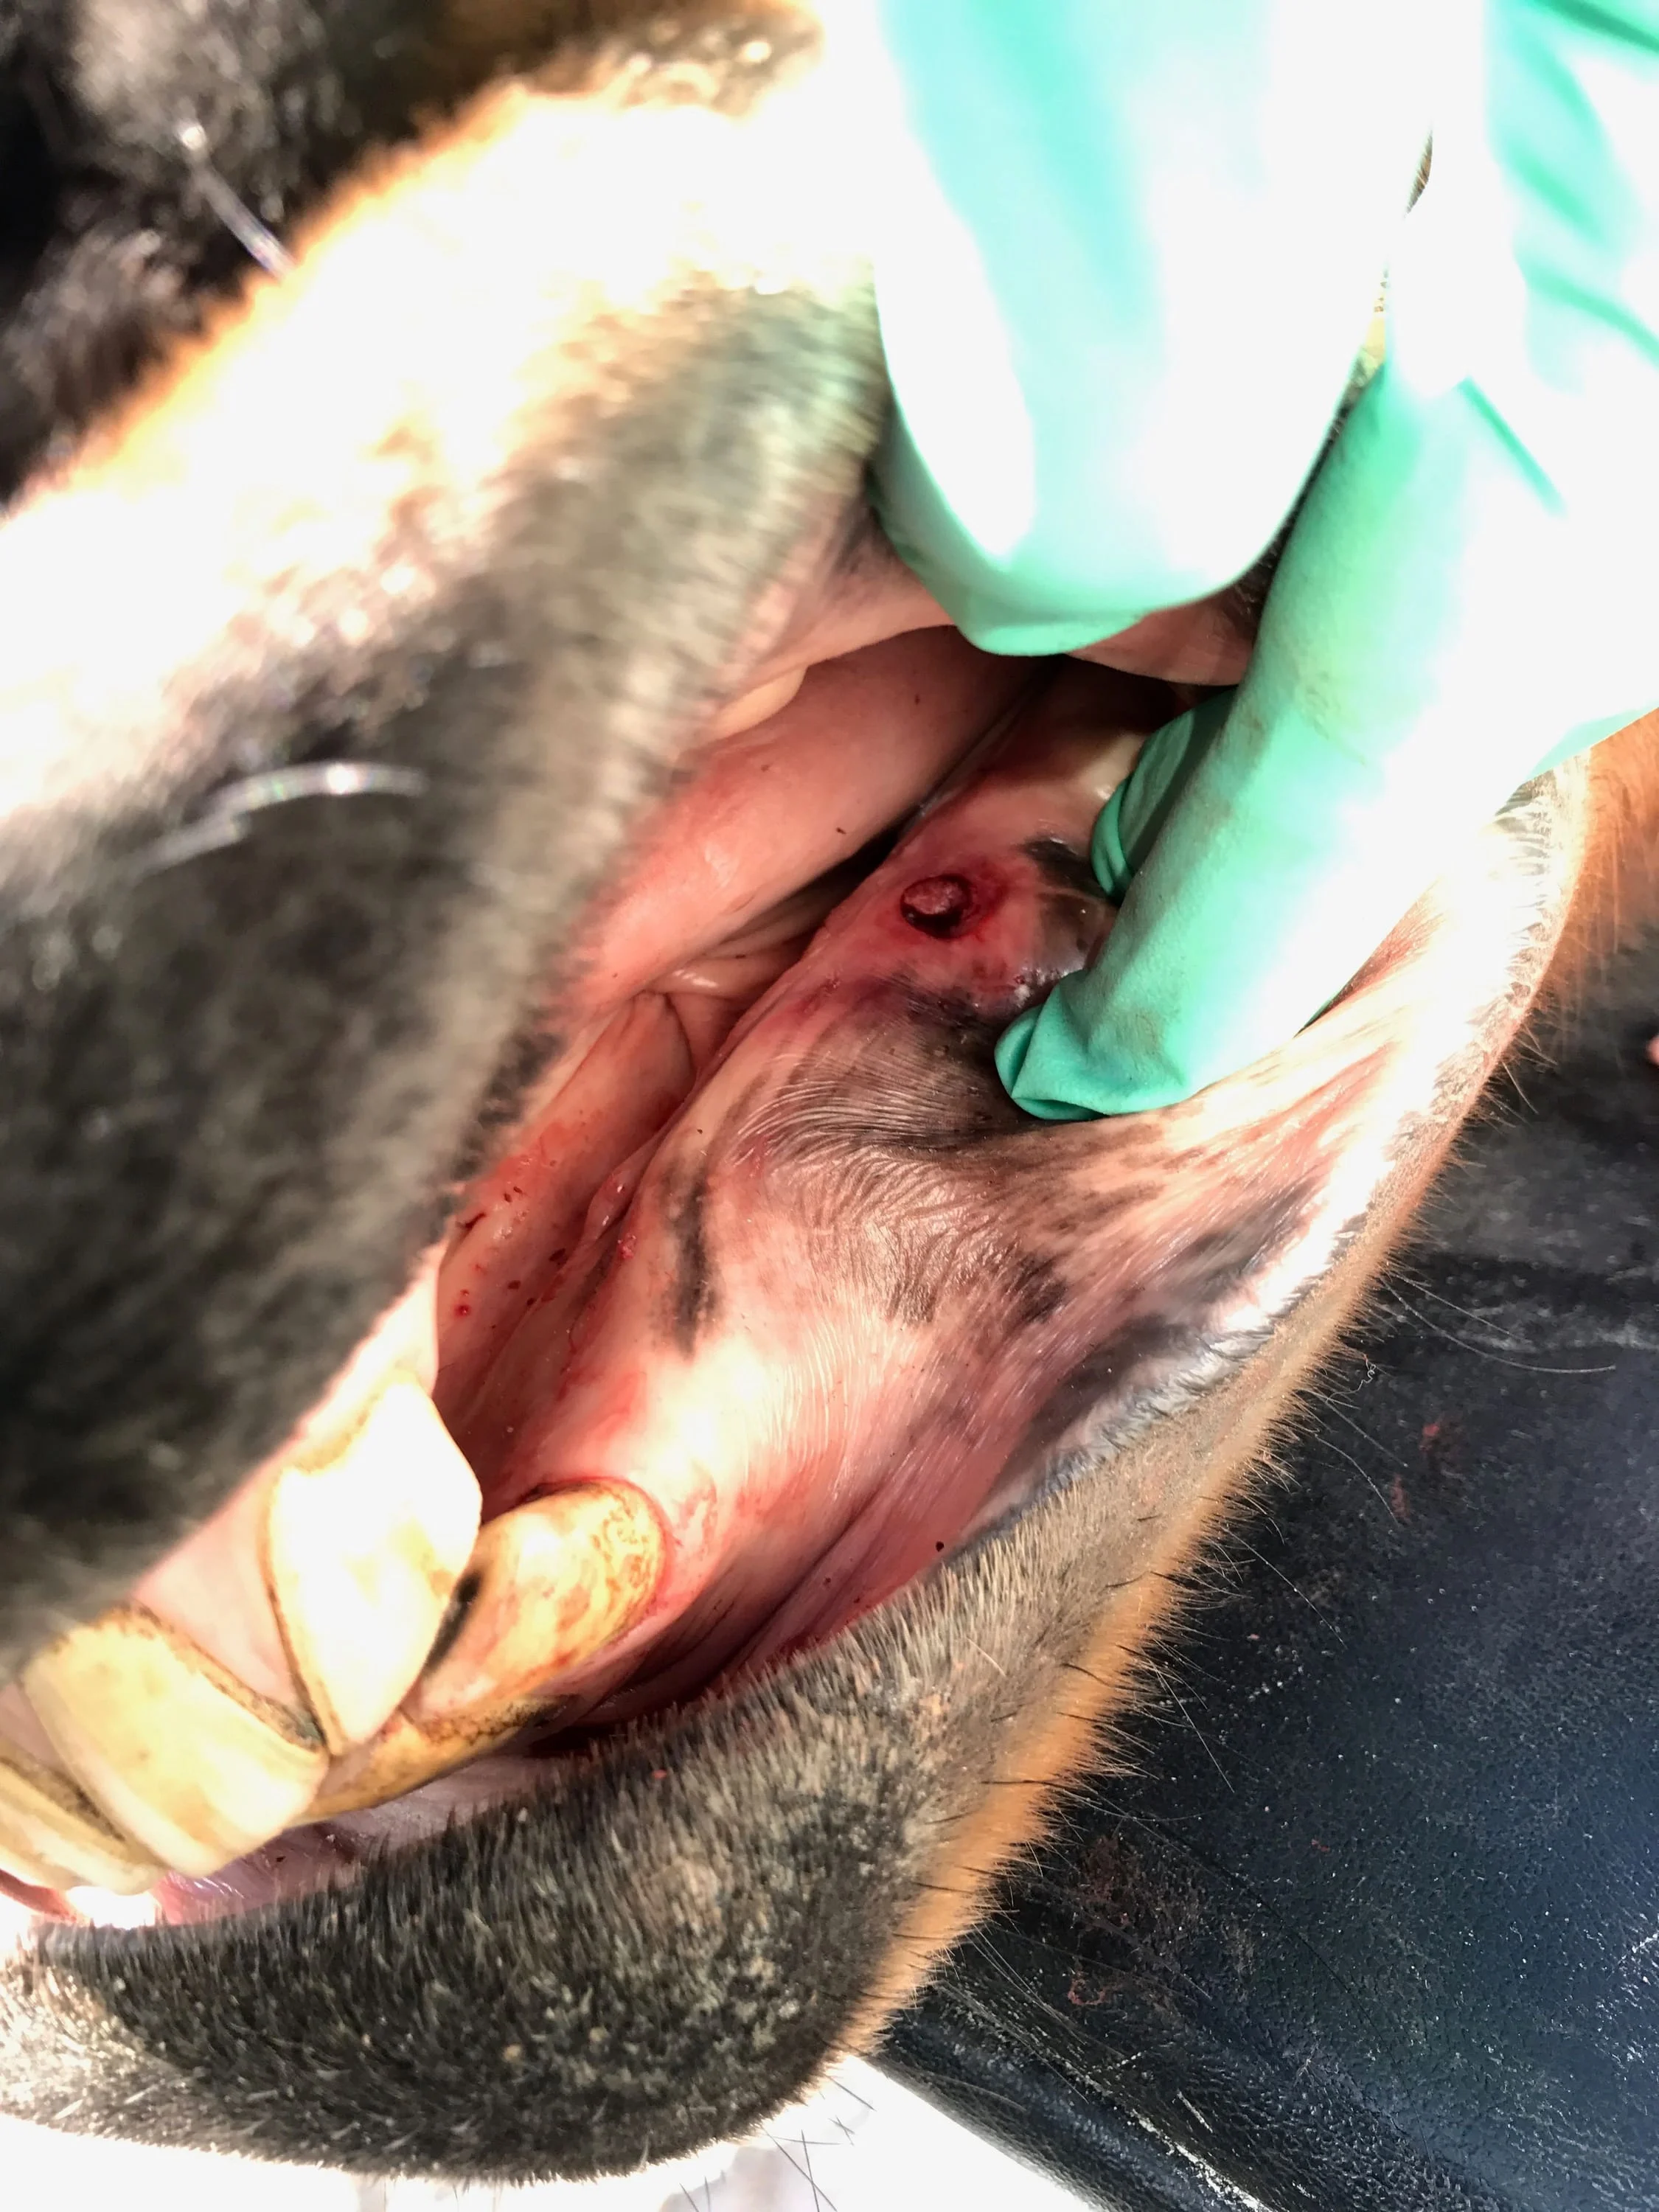 oral surgery